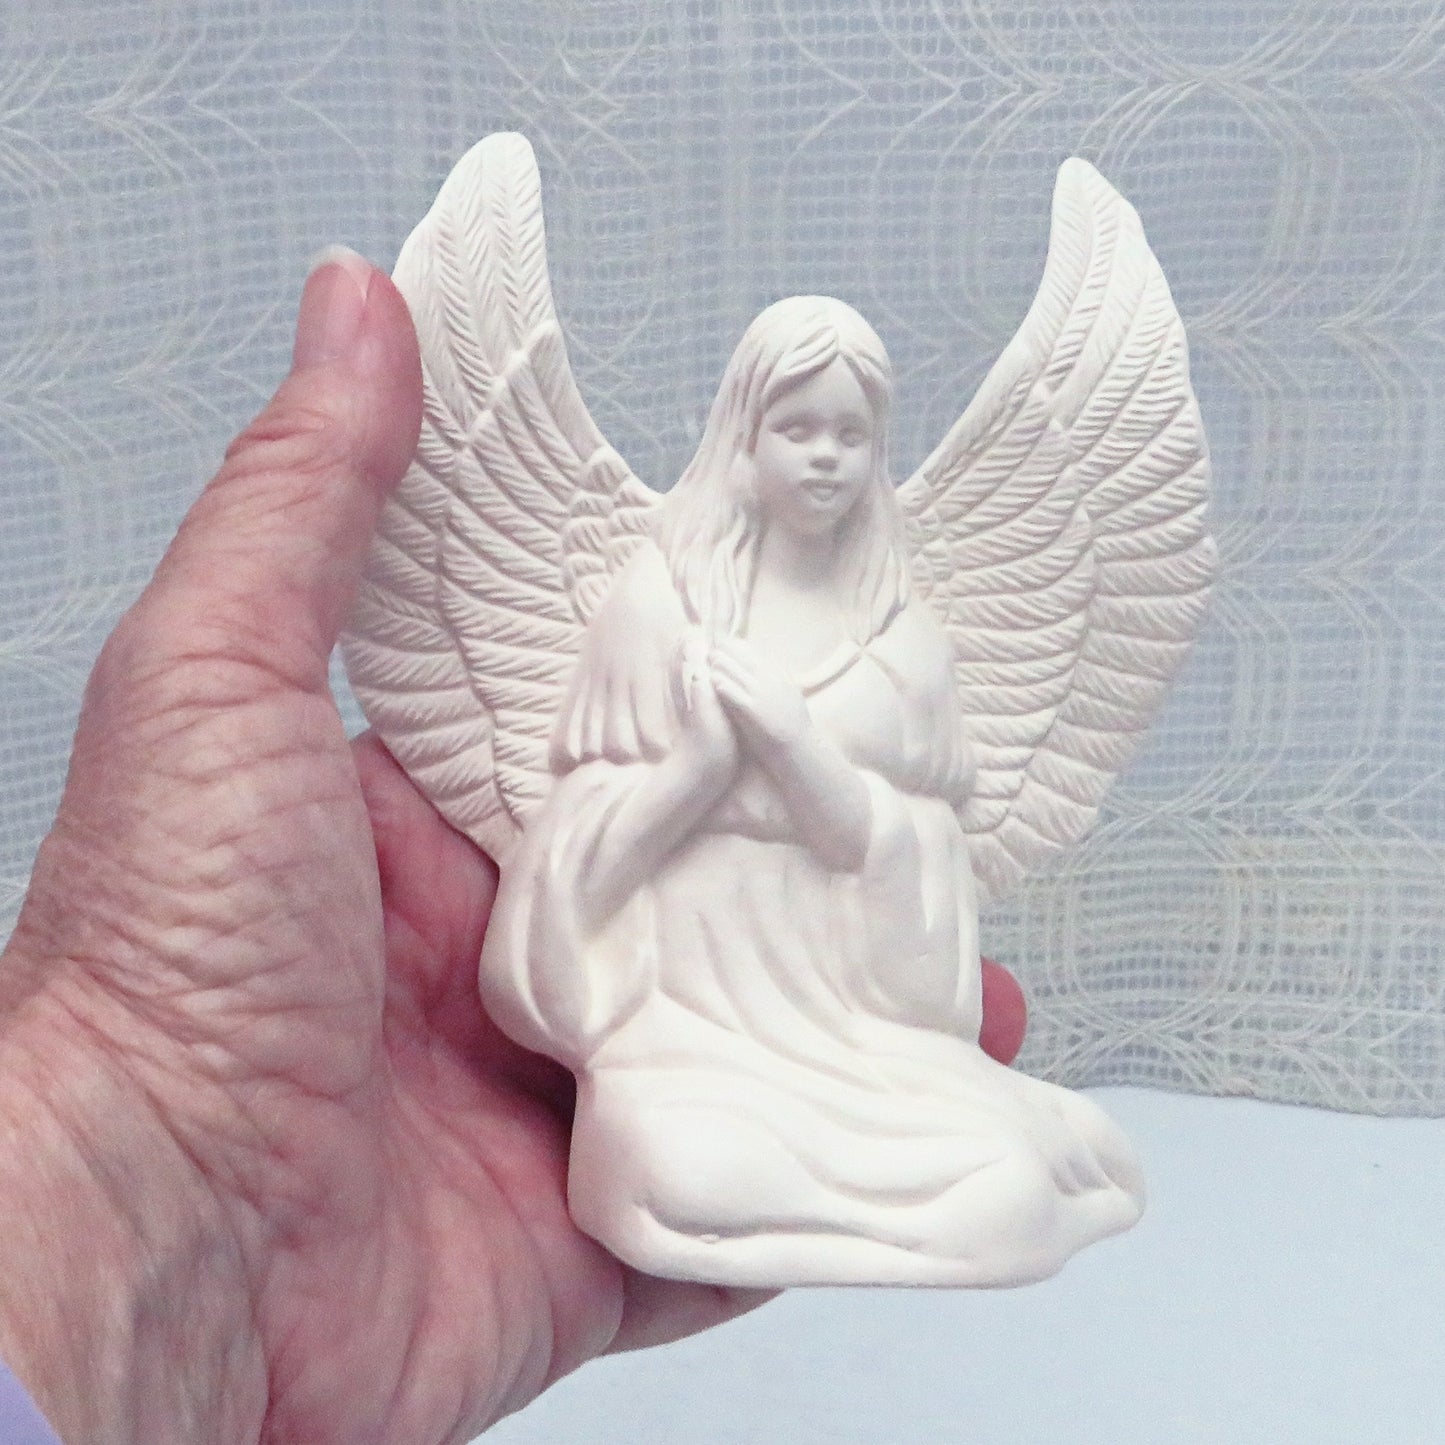 Handmade Ready to Paint Ceramic Side Sitting Angel Figurine, Unpainted Ceramic Bisque Angel Figurine